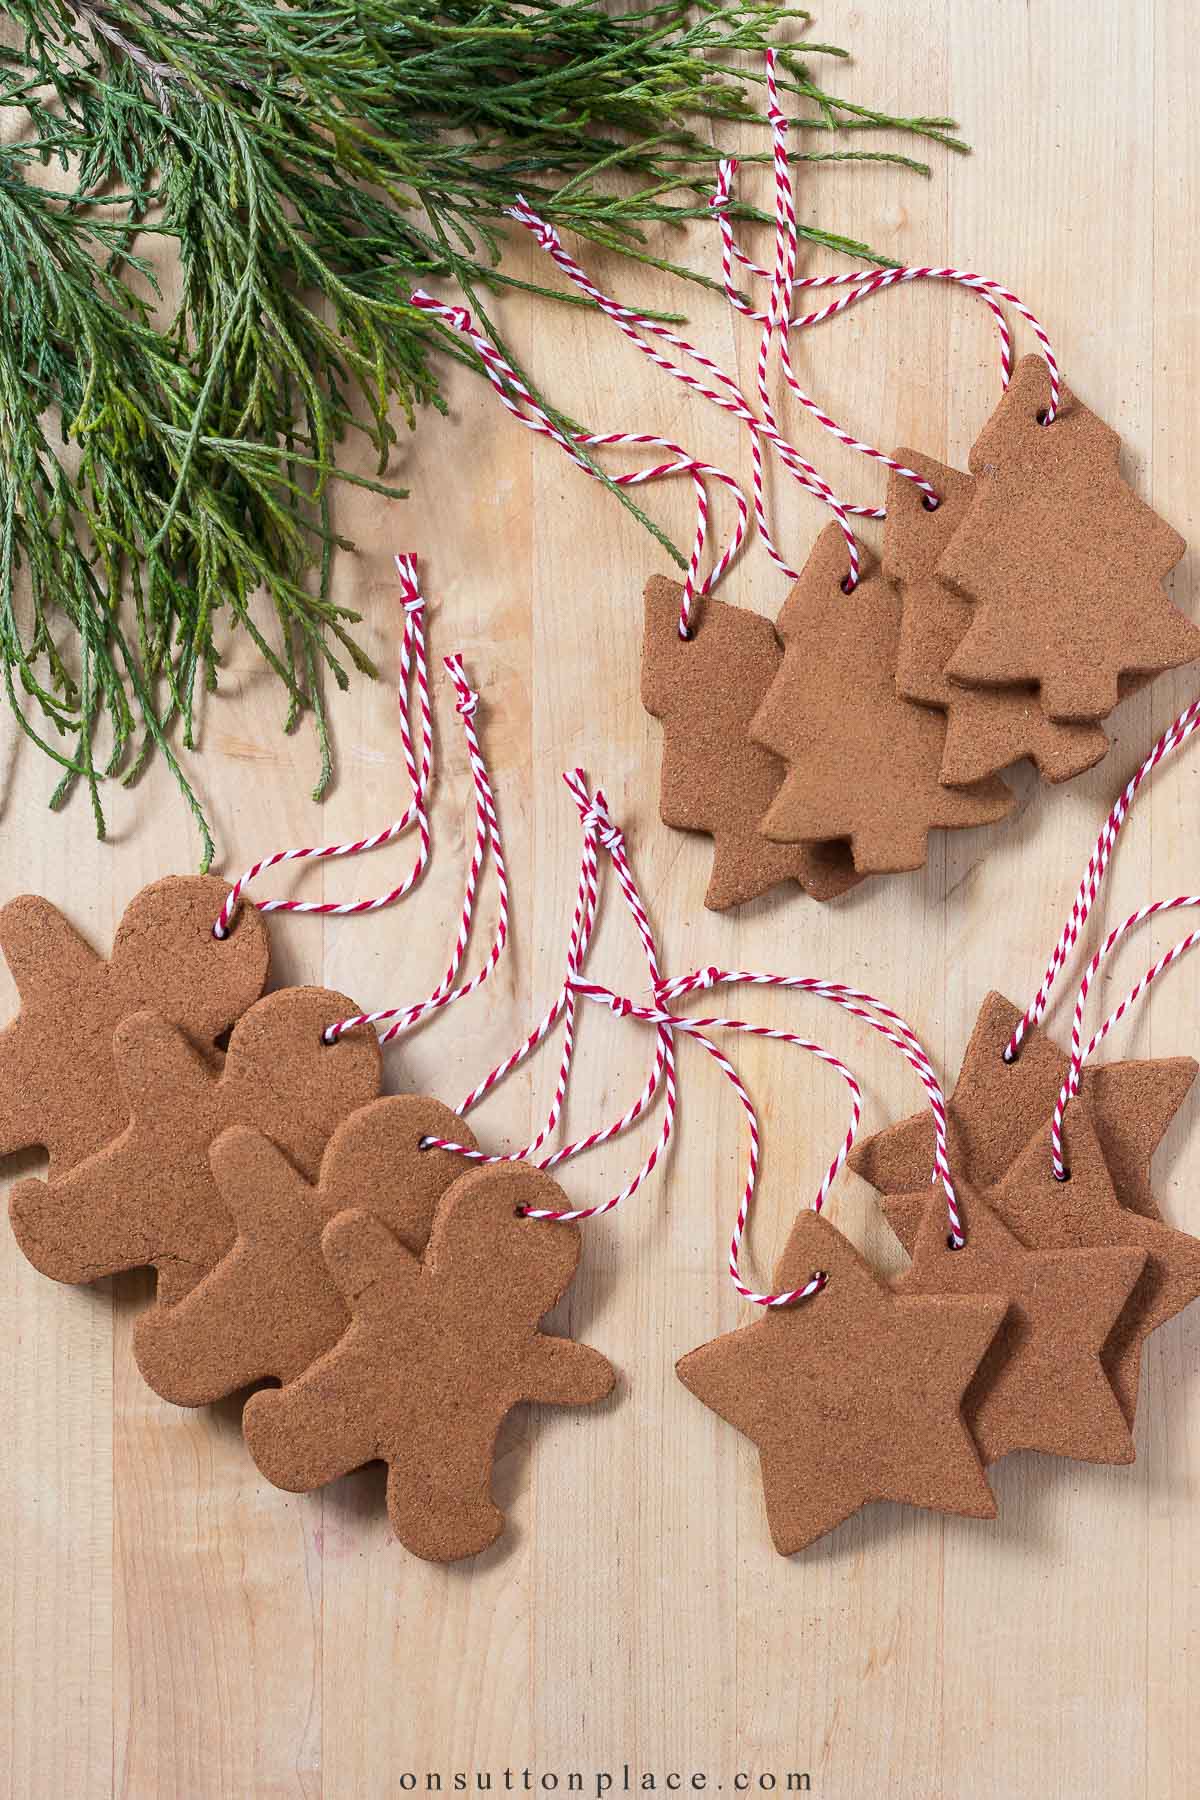 https://www.onsuttonplace.com/wp-content/uploads/2022/11/gingerbread-men-christmas-trees-stars-cinnamon-applesauce-ornaments.jpg